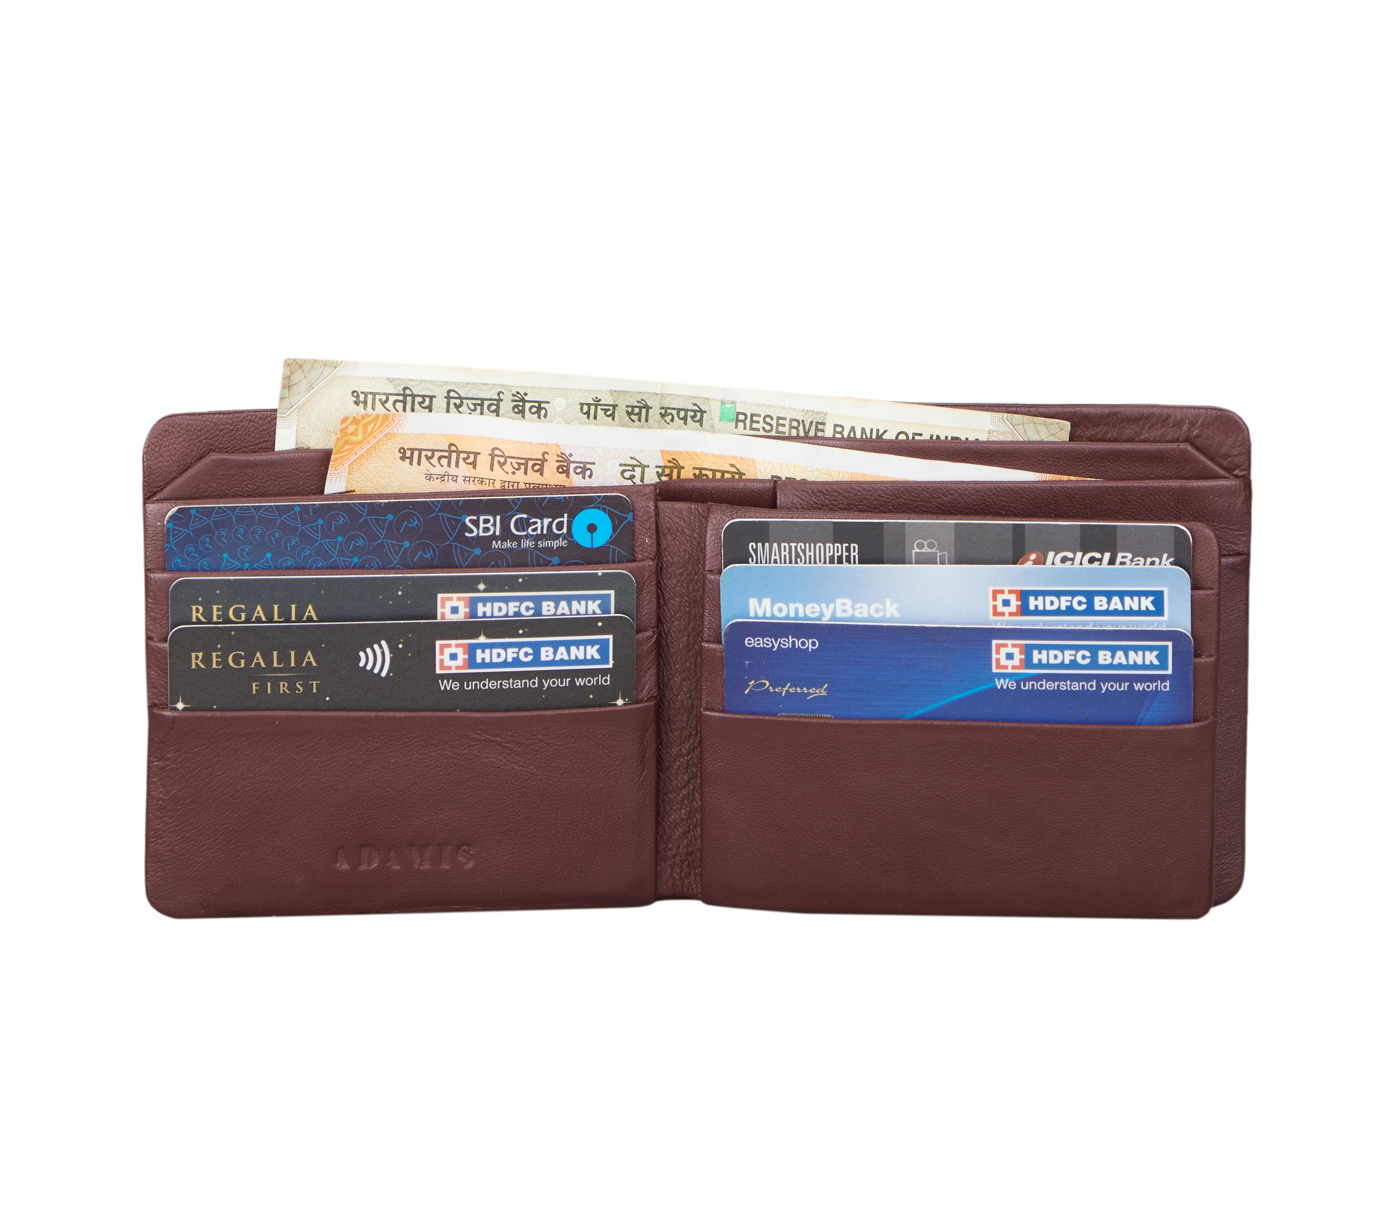 Wallet-Almeda-Men's bifold wallet with coin pocket in Genuine Leather - Wine